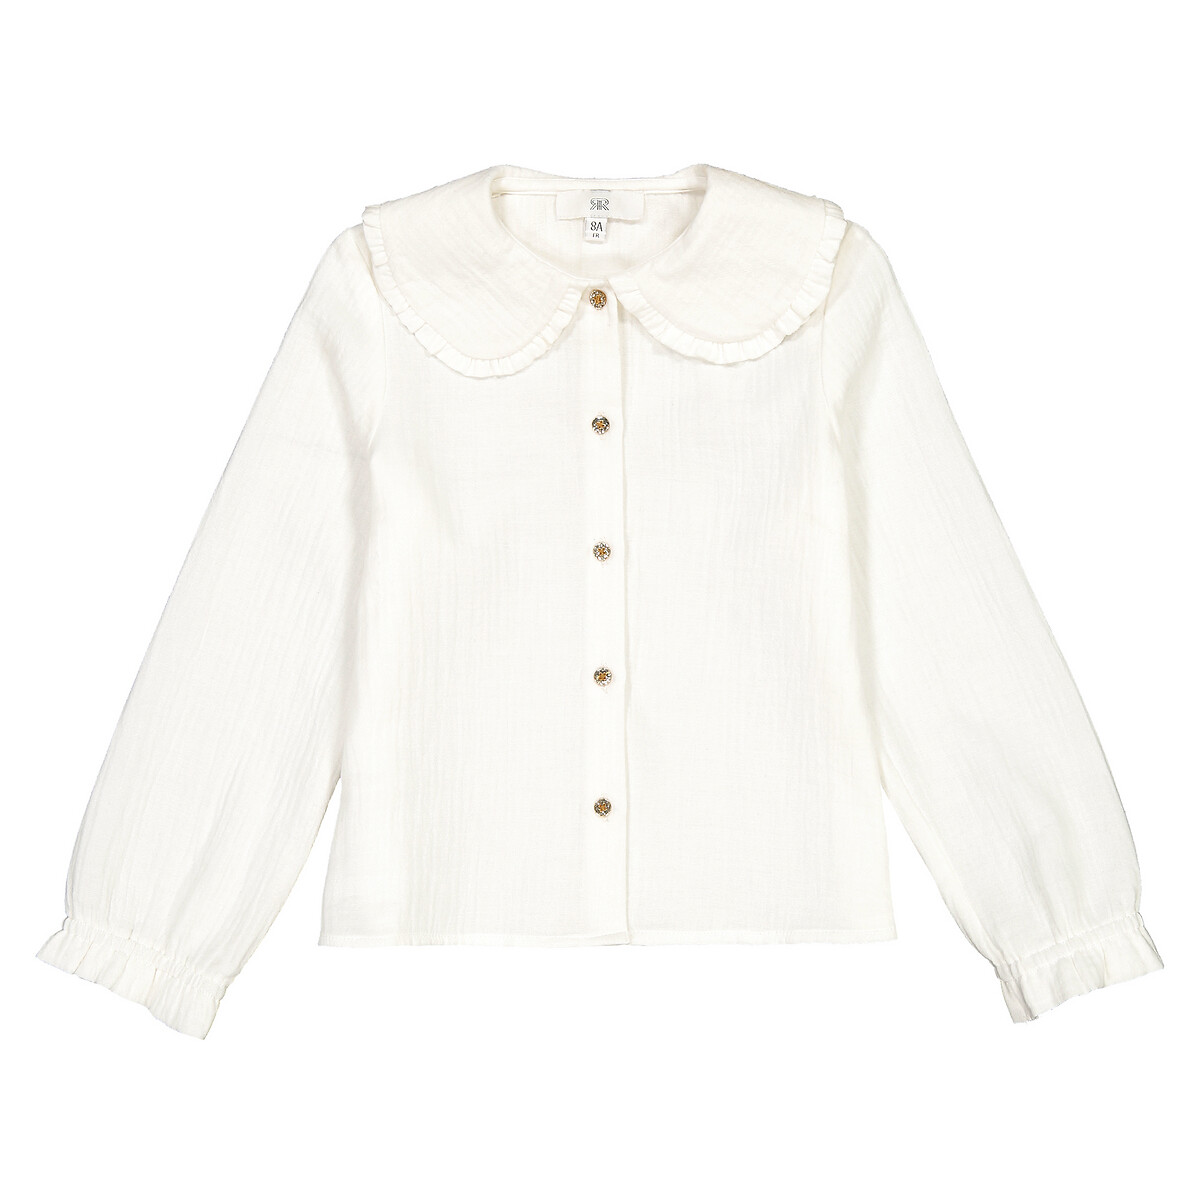 Organic cotton muslin blouse with peter pan collar, 3-12 years, ecru ...